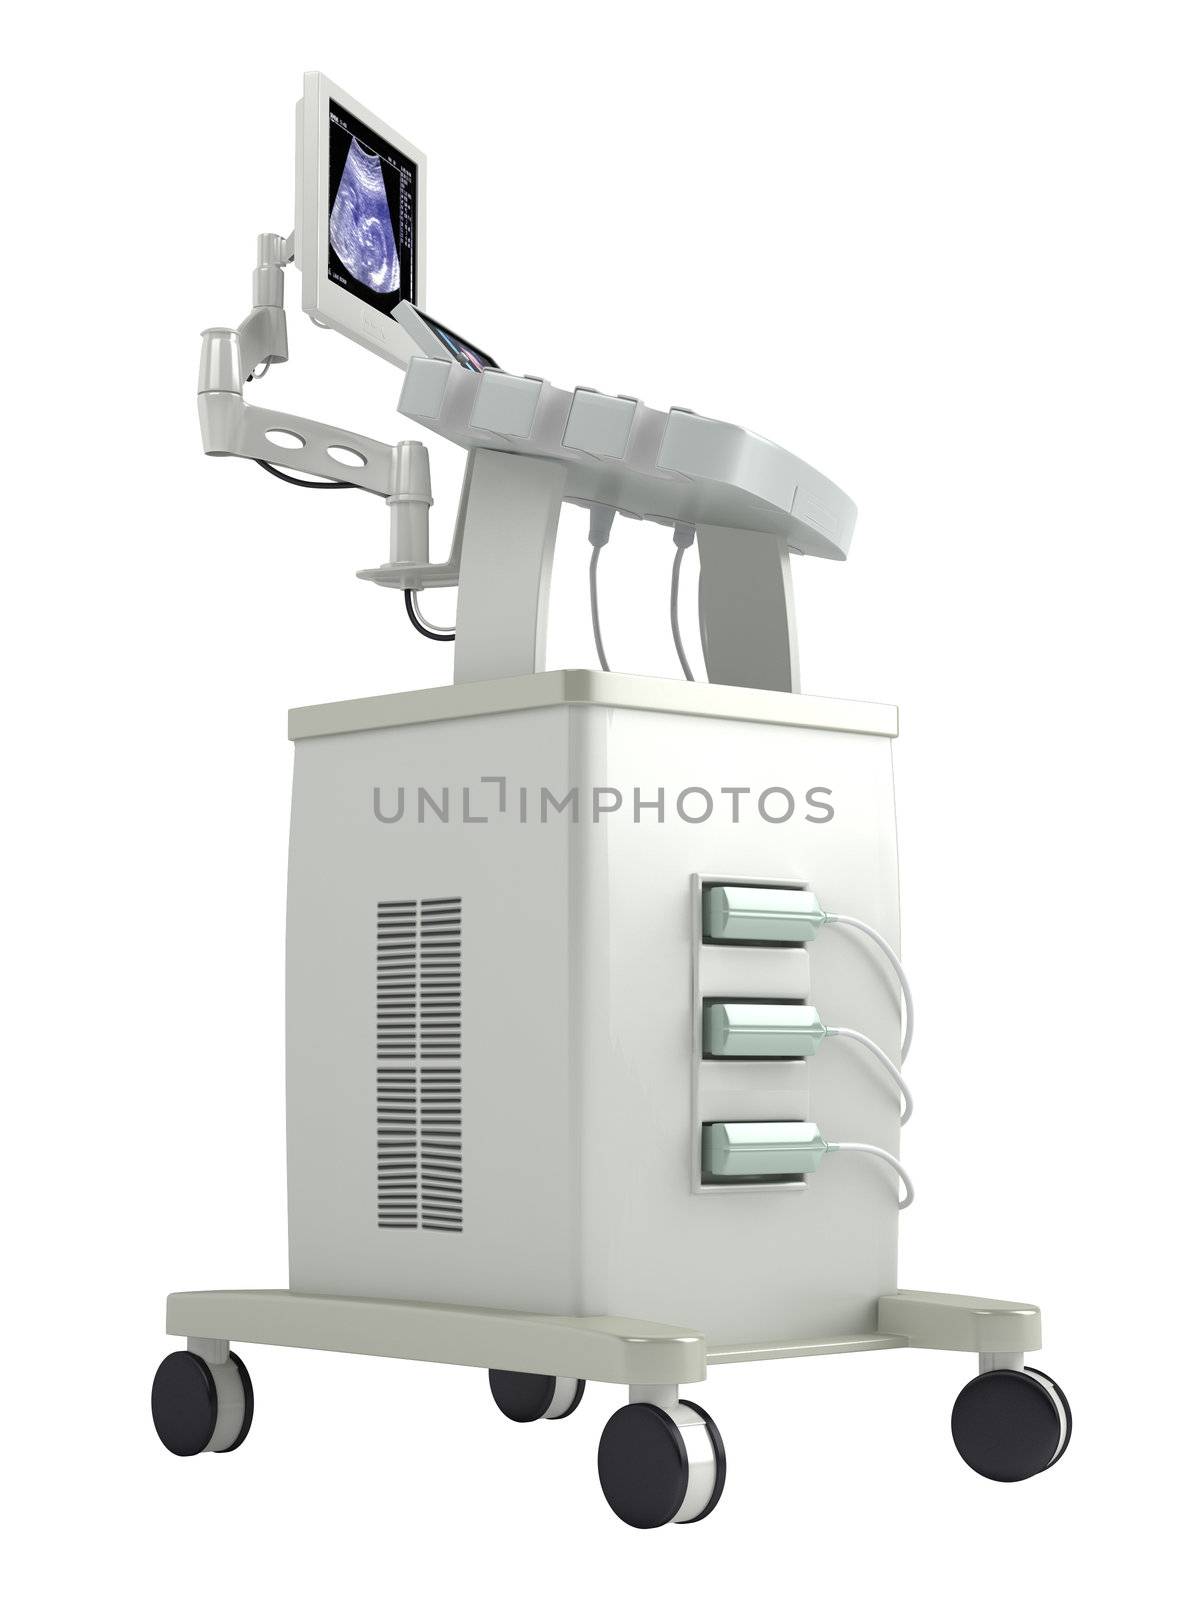 Ultrasound scanner for ultrasonography by AlexanderMorozov